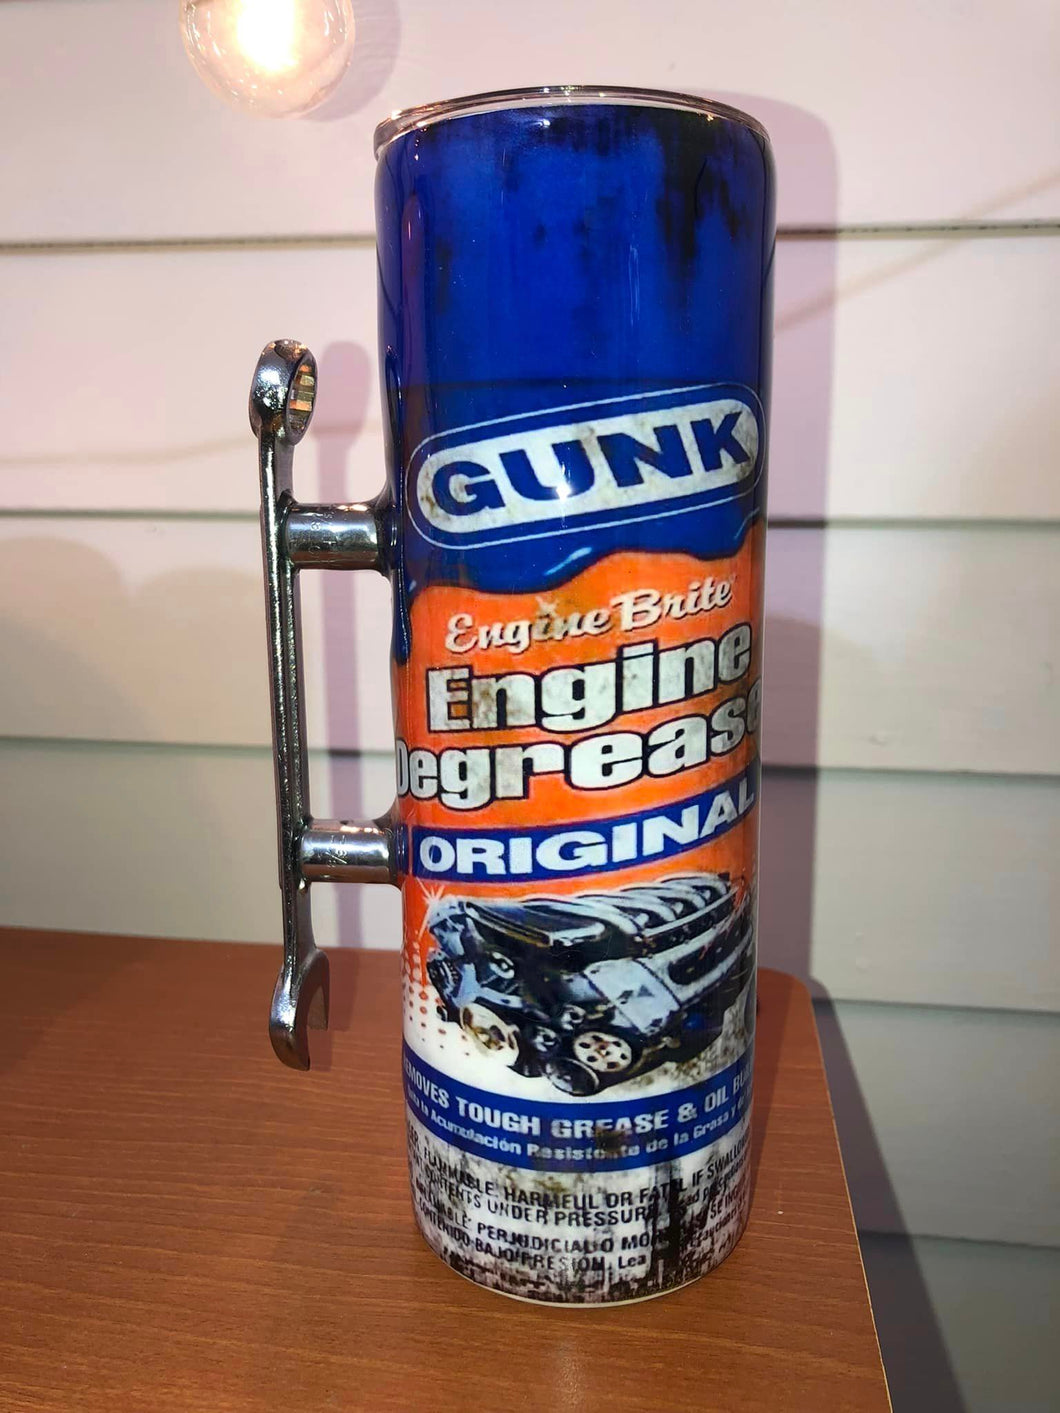 Gunk Engine Grease handled Finished Designer Tumbler   Ready to ship!  30 ounce tumbler